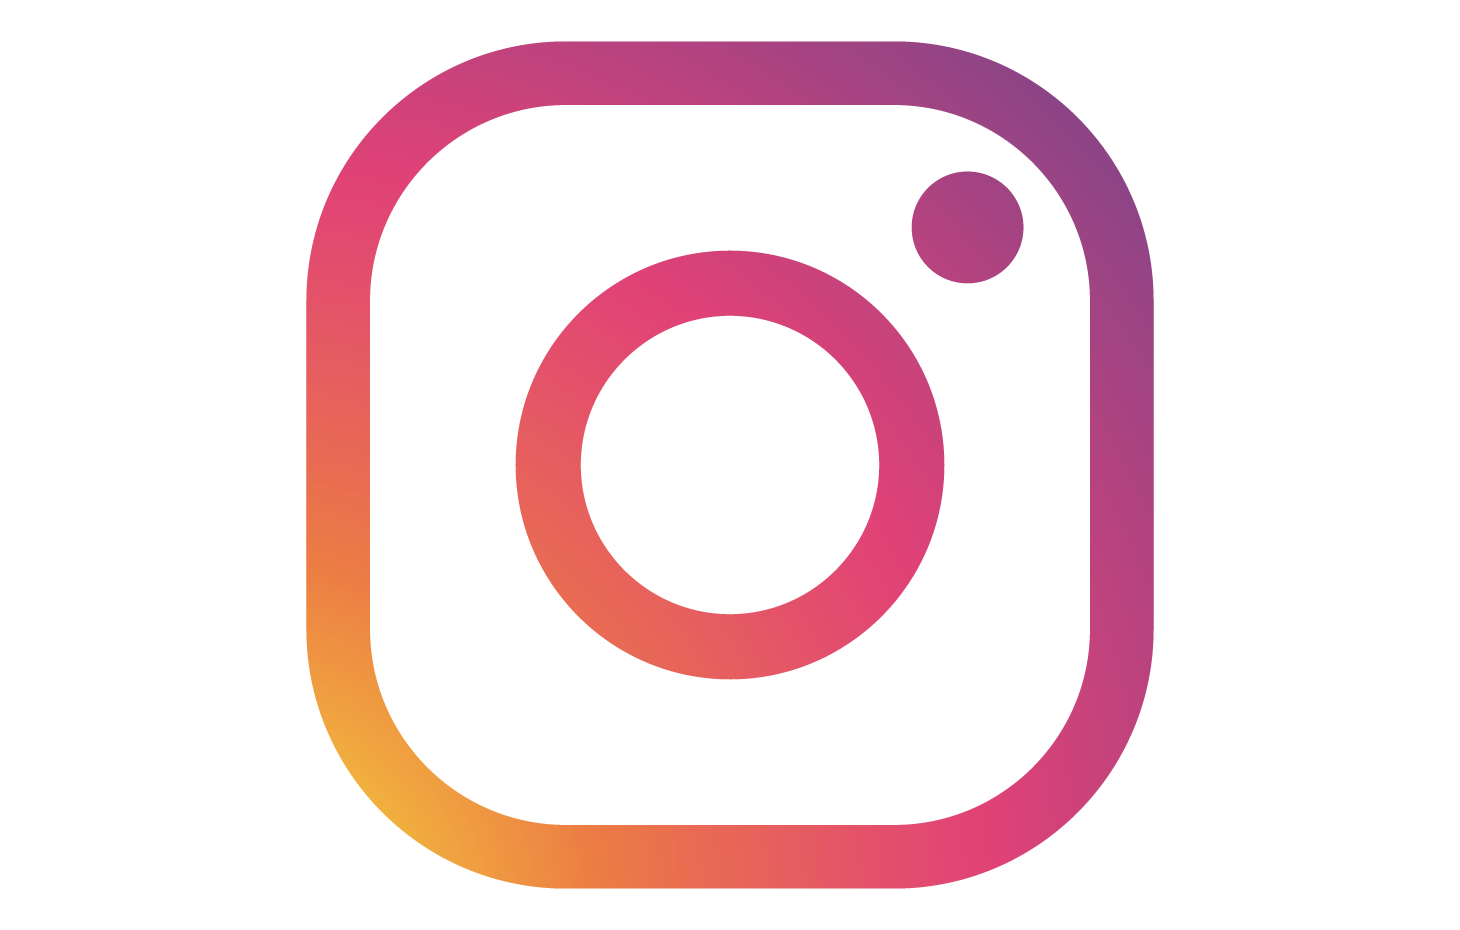 Instagram logo png. Инстаграм. Лого инстаграмма. Значок Инстаграм. Значок Инстаграмм без фона.